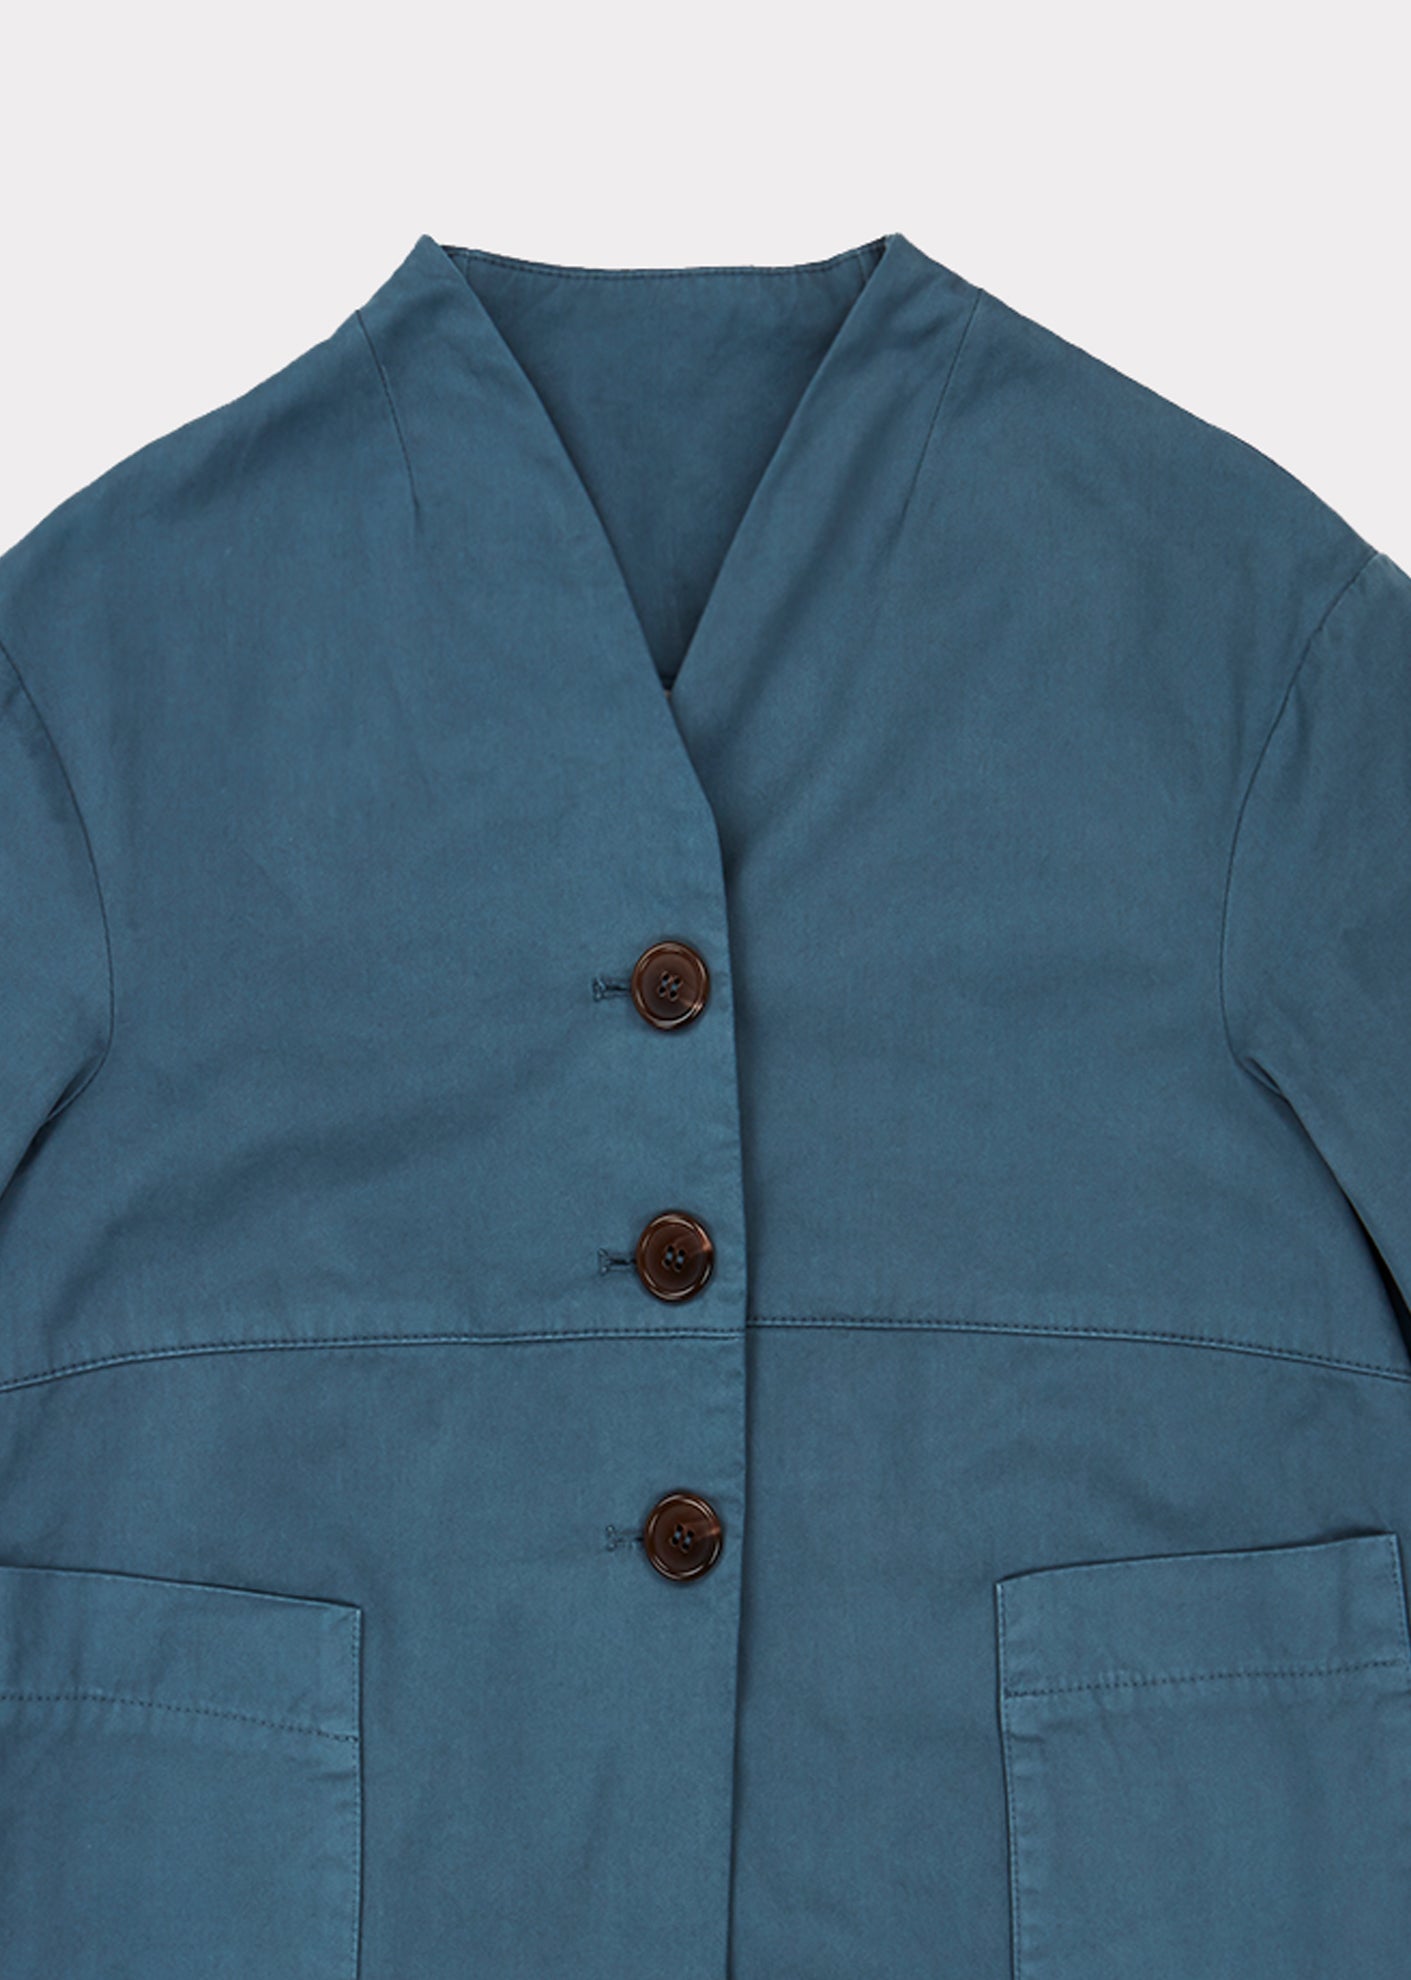 Girls Blue Buttons Cotton Coat